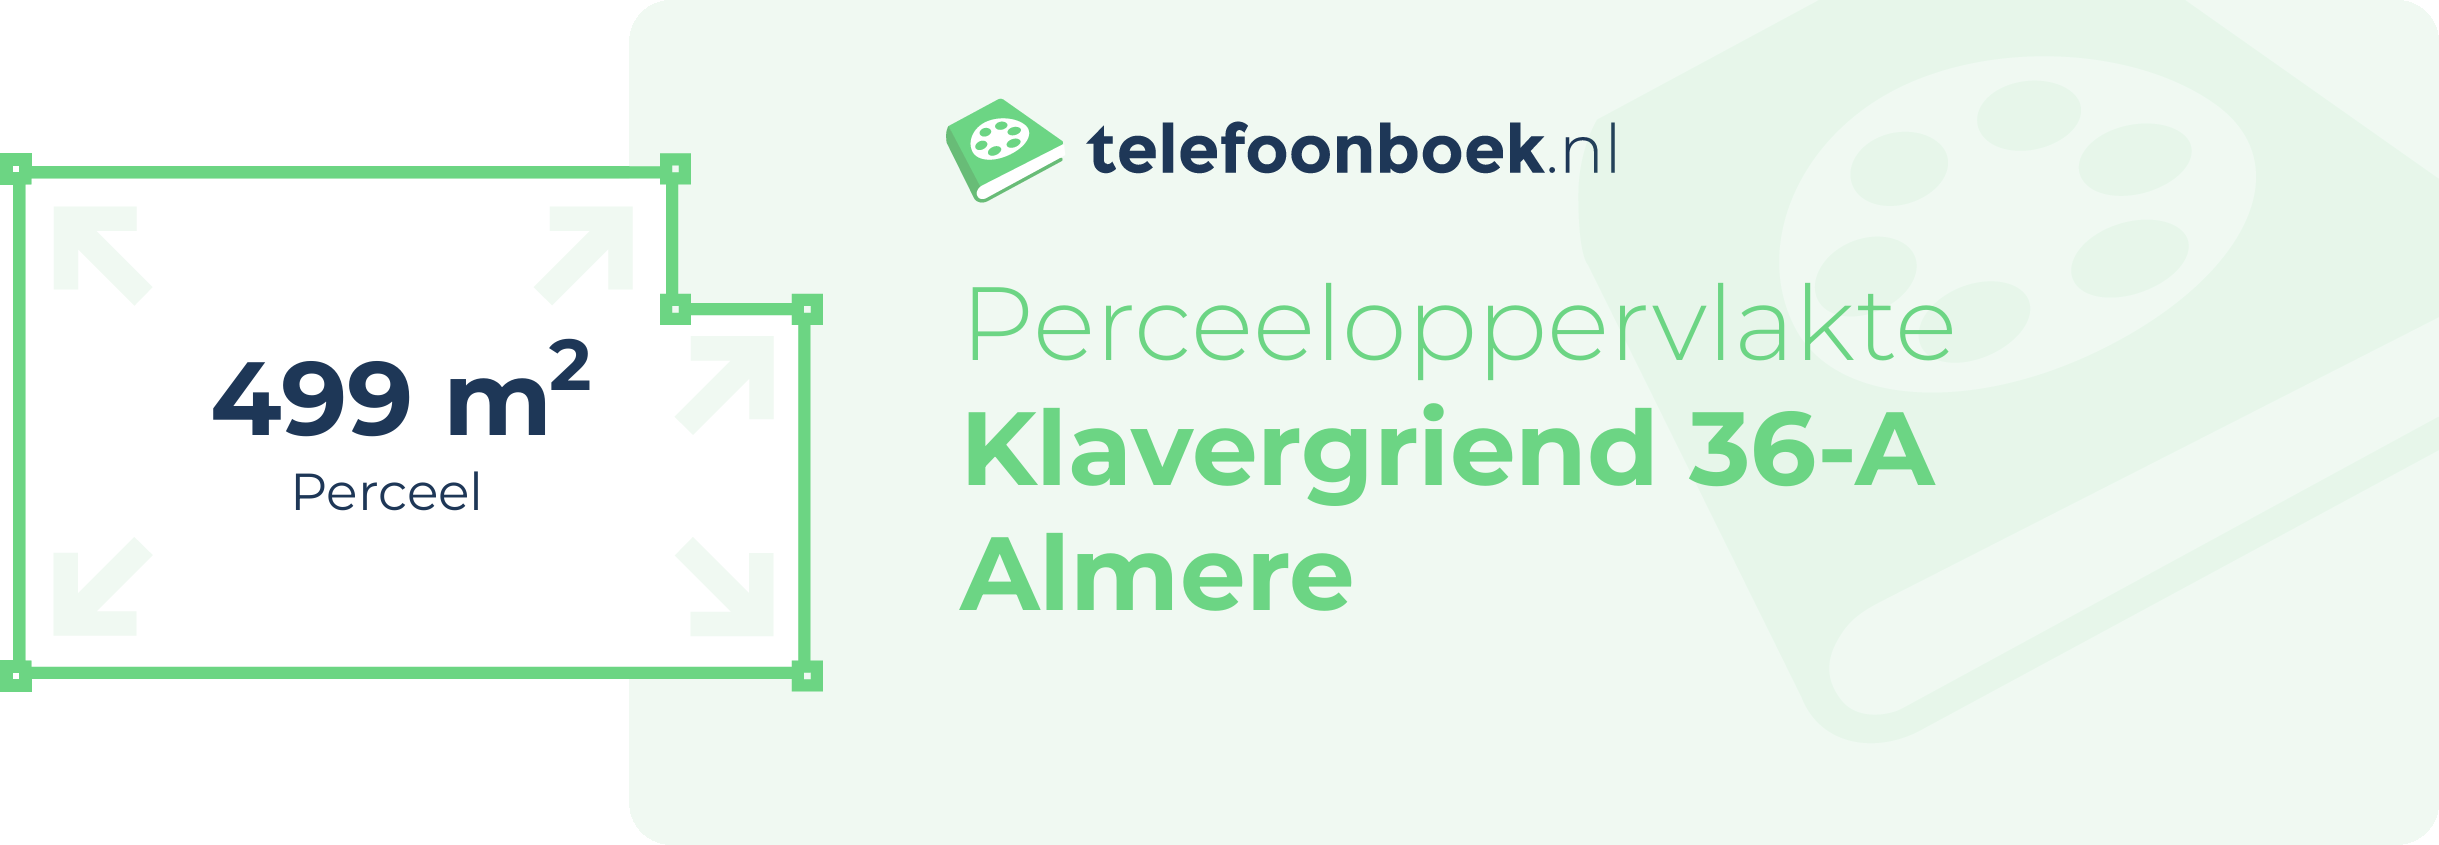 Perceeloppervlakte Klavergriend 36-A Almere